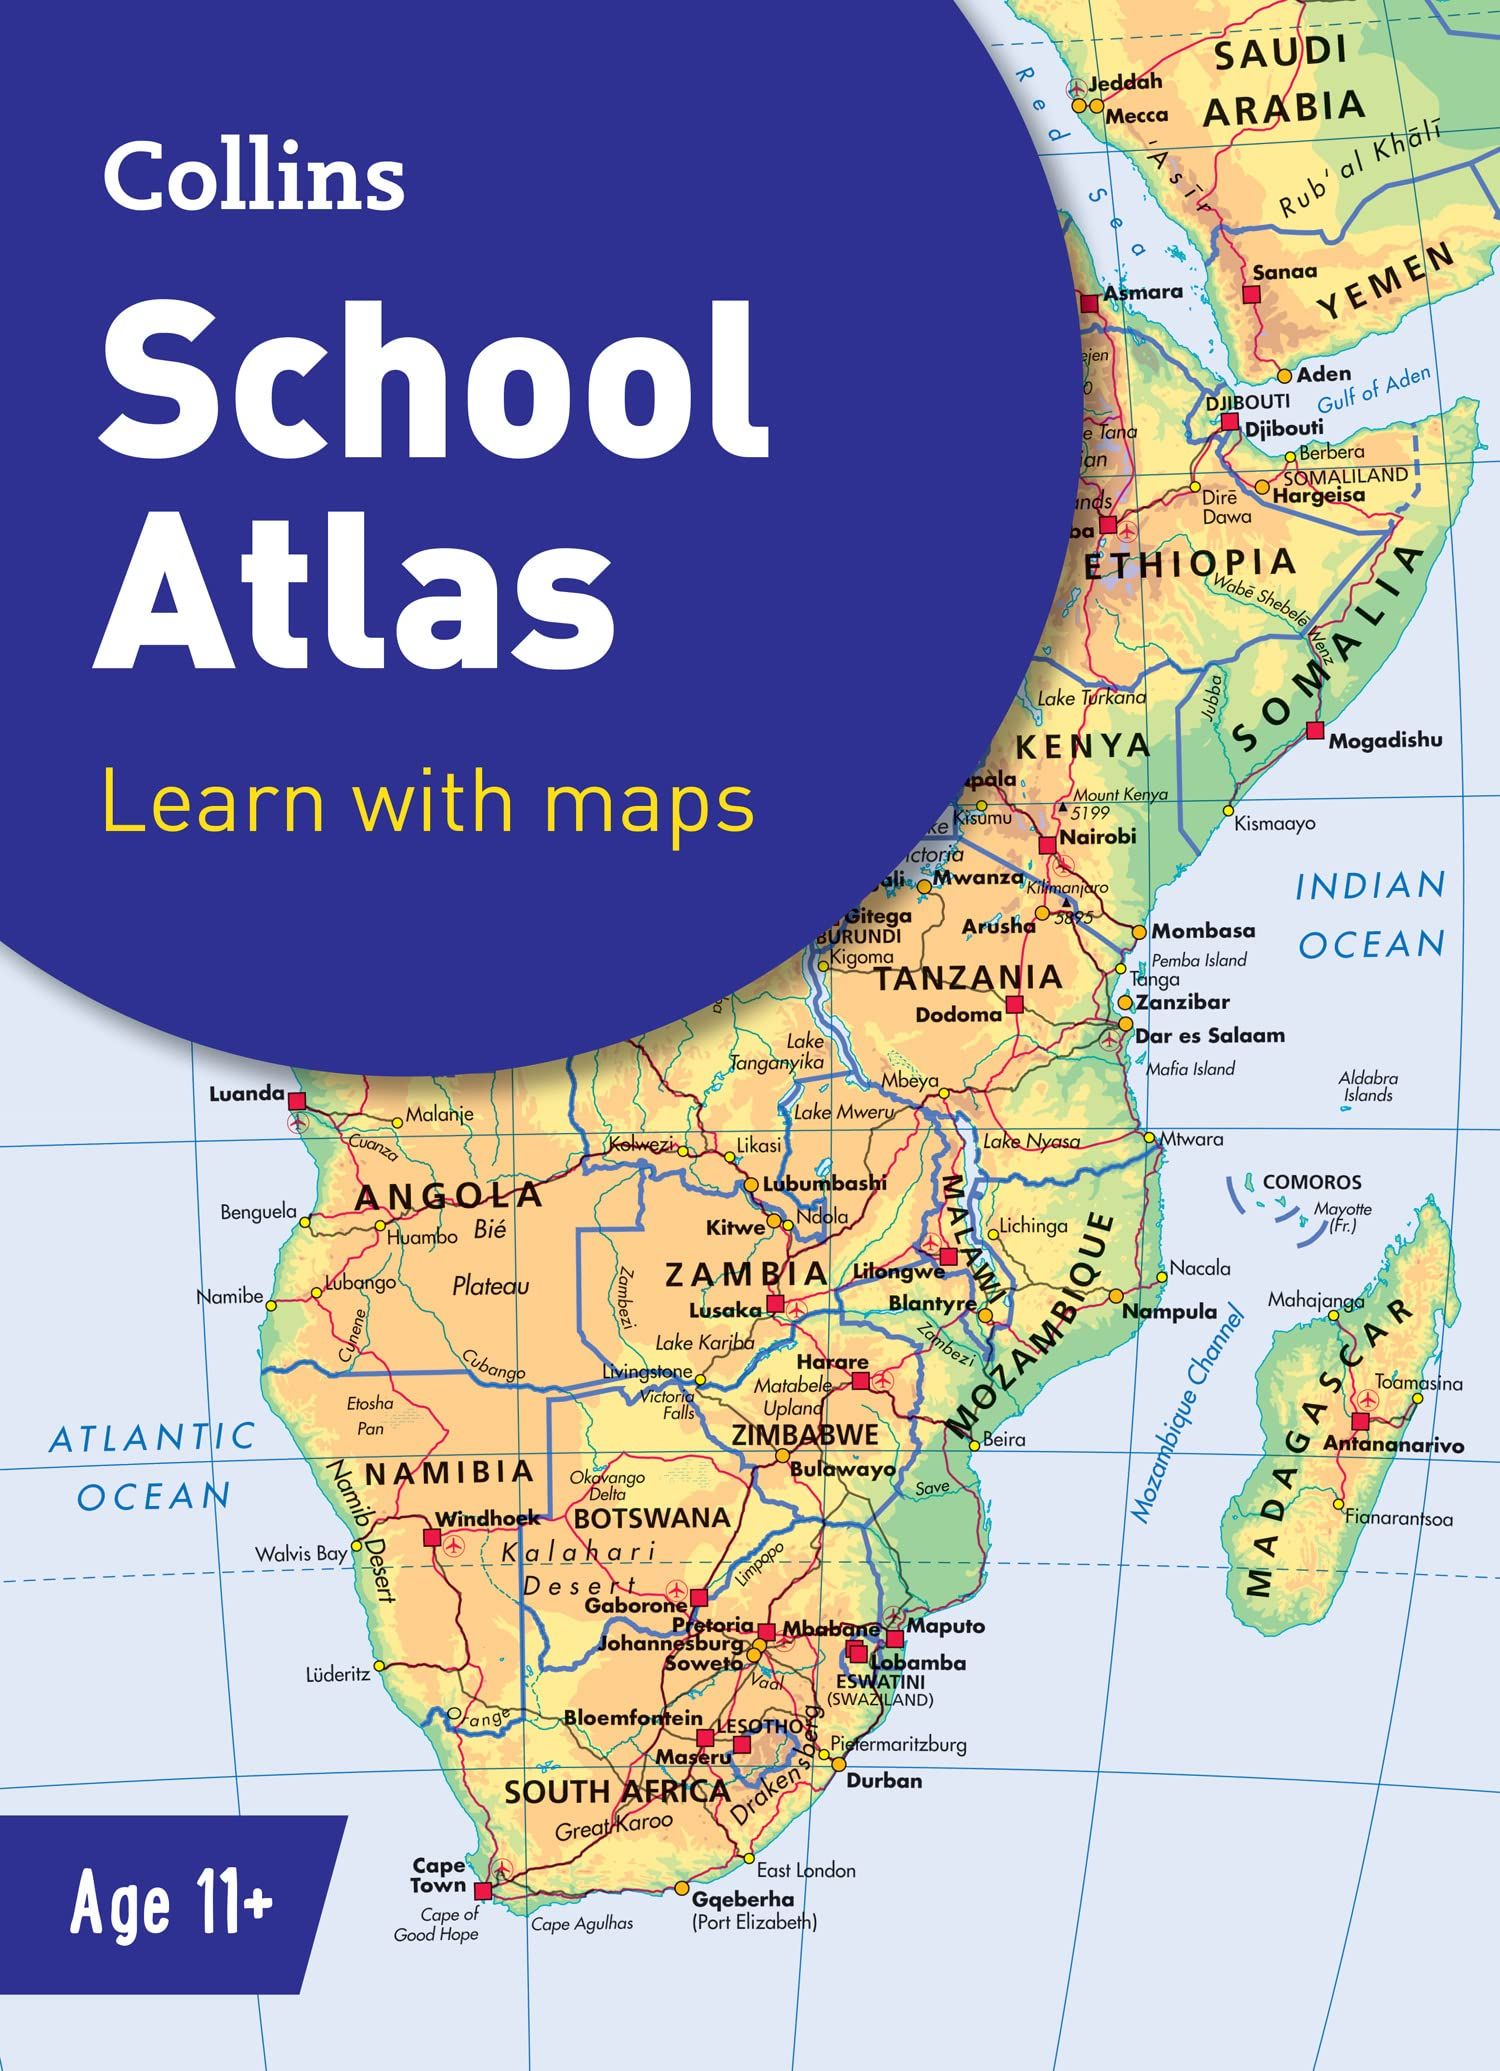 Picture of Collins School Atlas